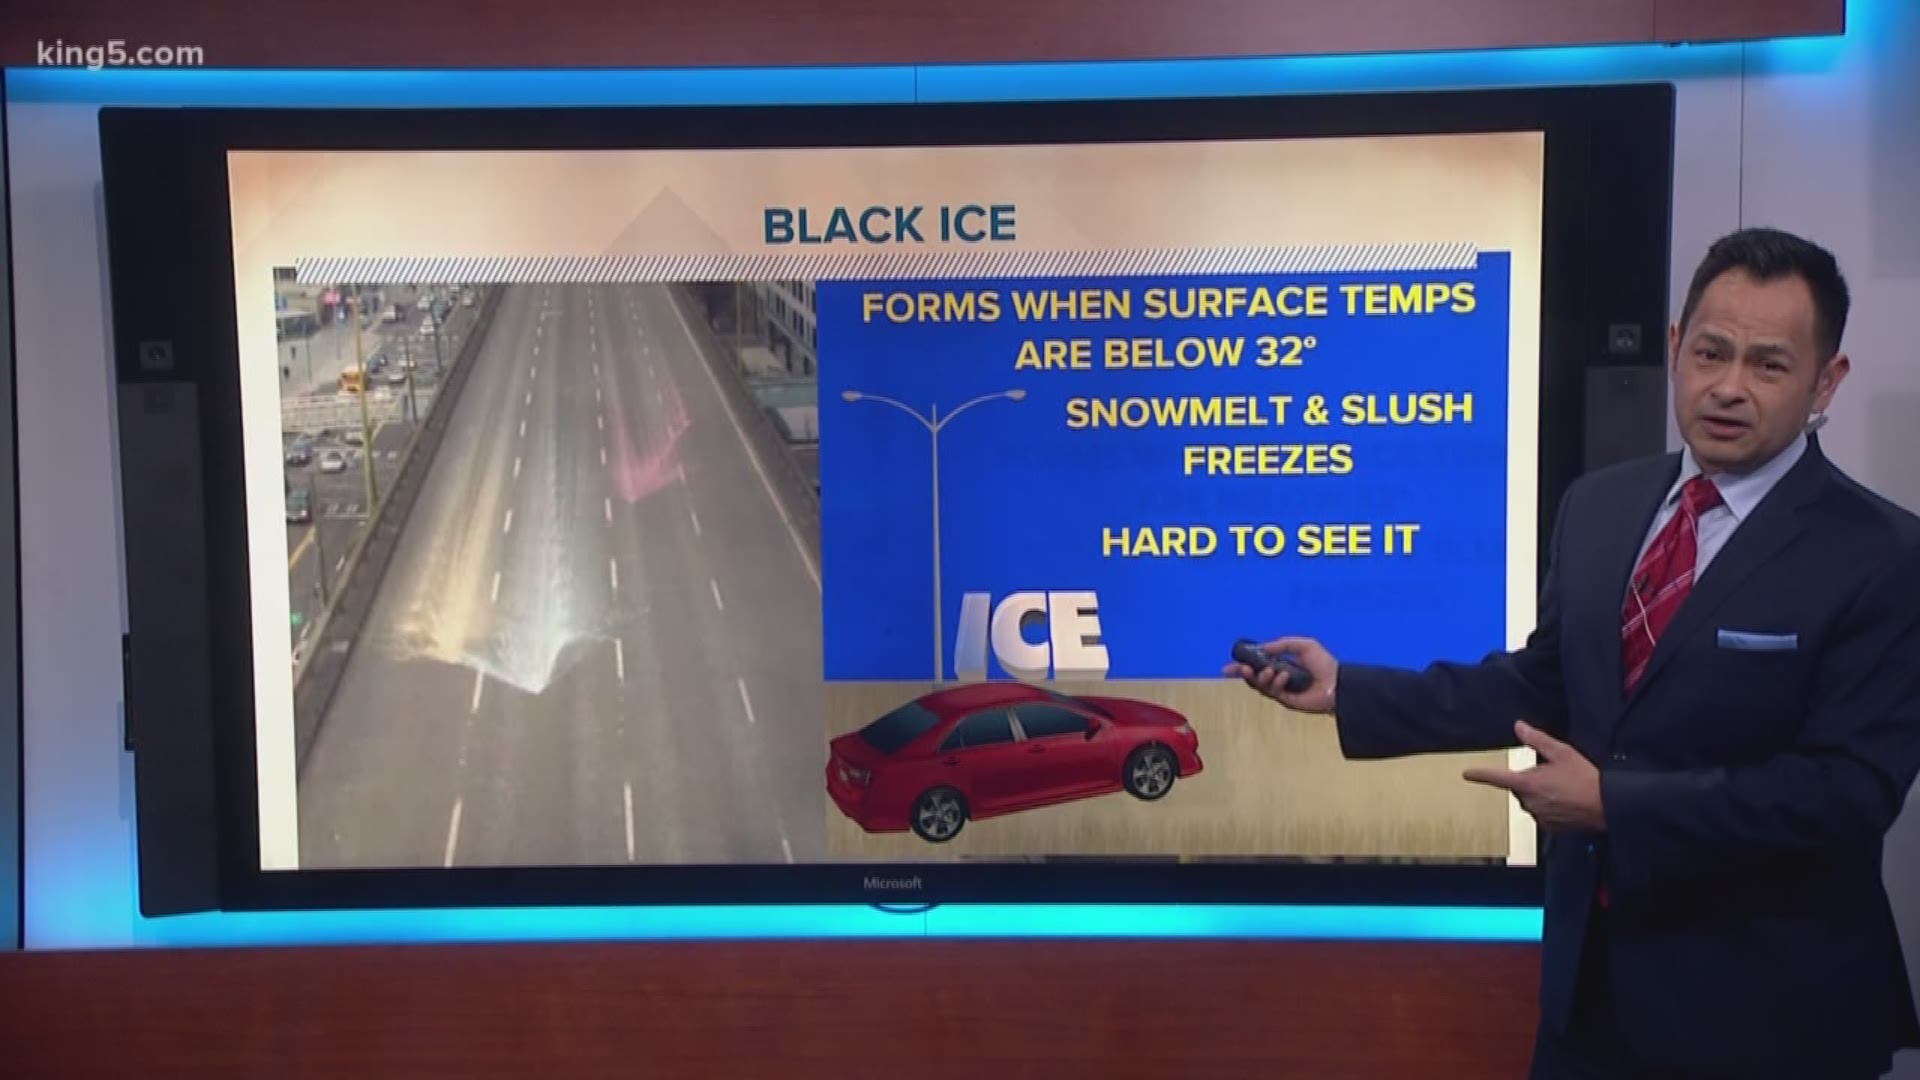 KING 5's Craig Herrera explains how black ice forms.